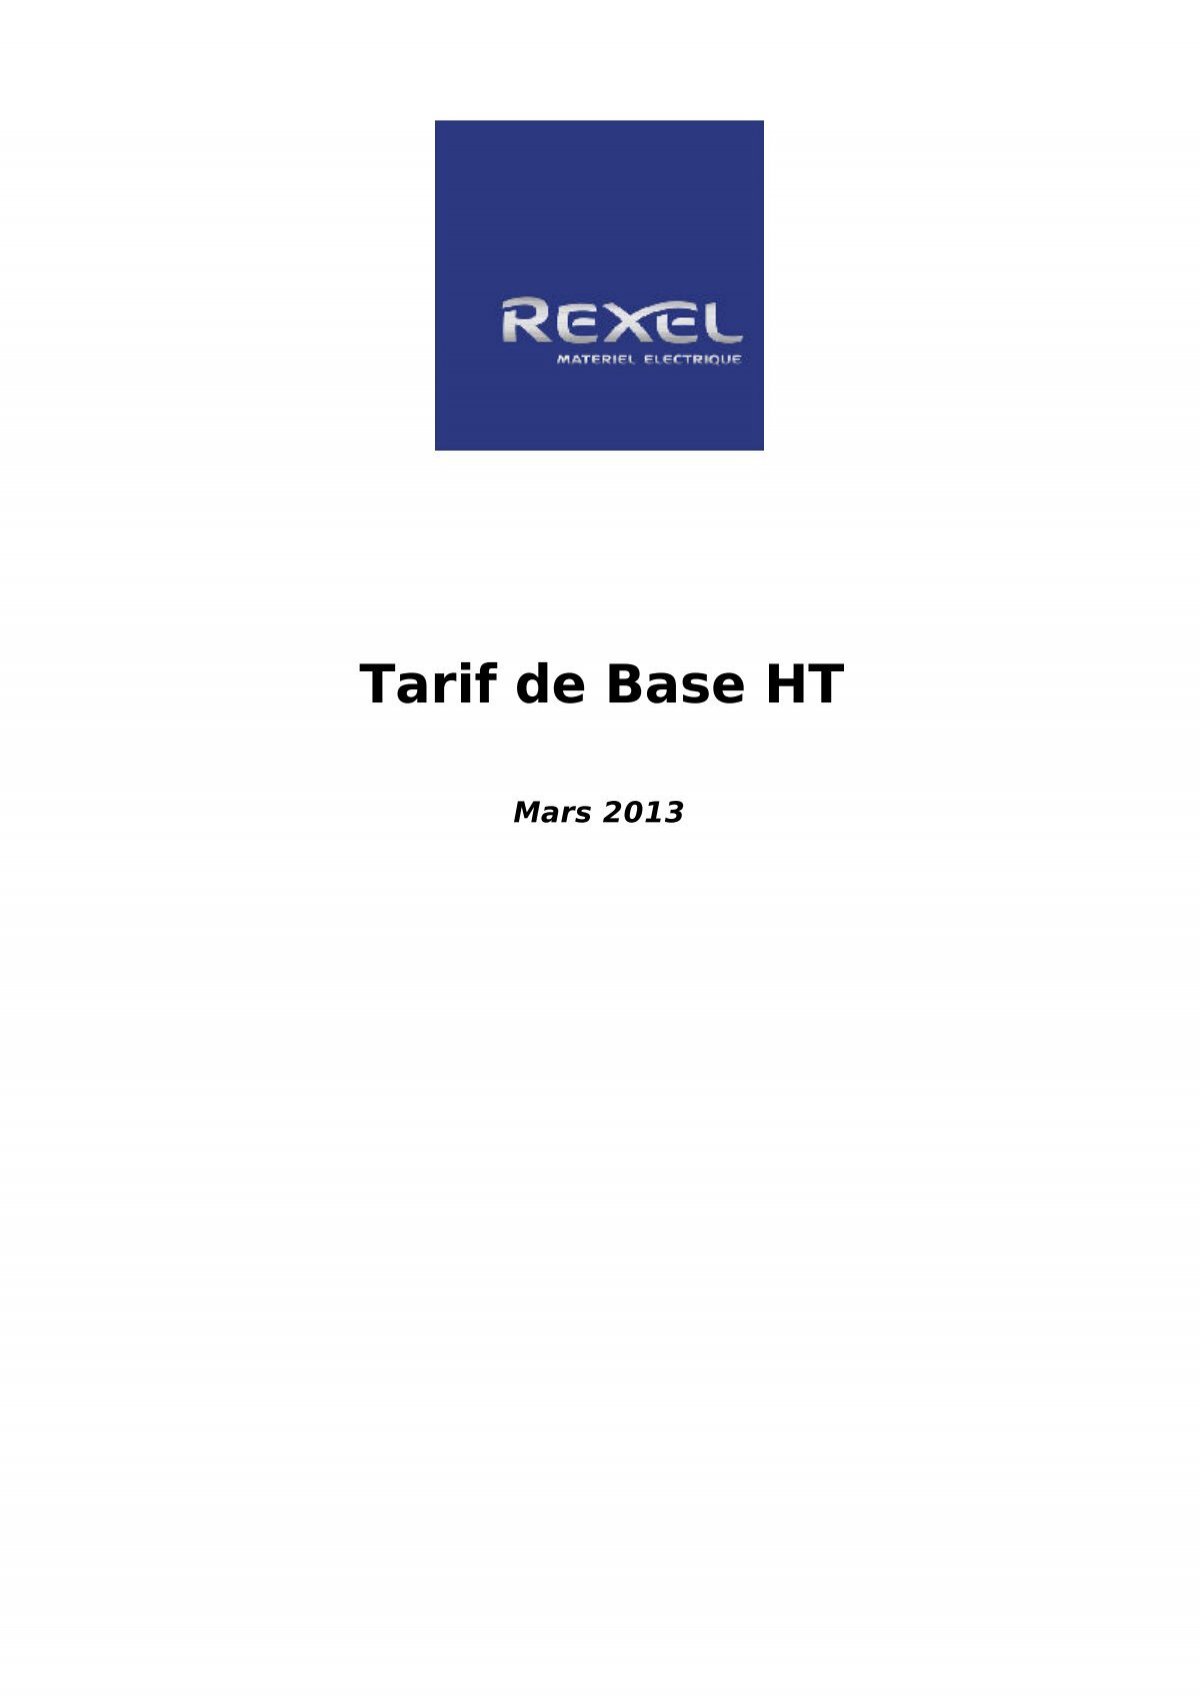 Tarif de Base HT - Rexel